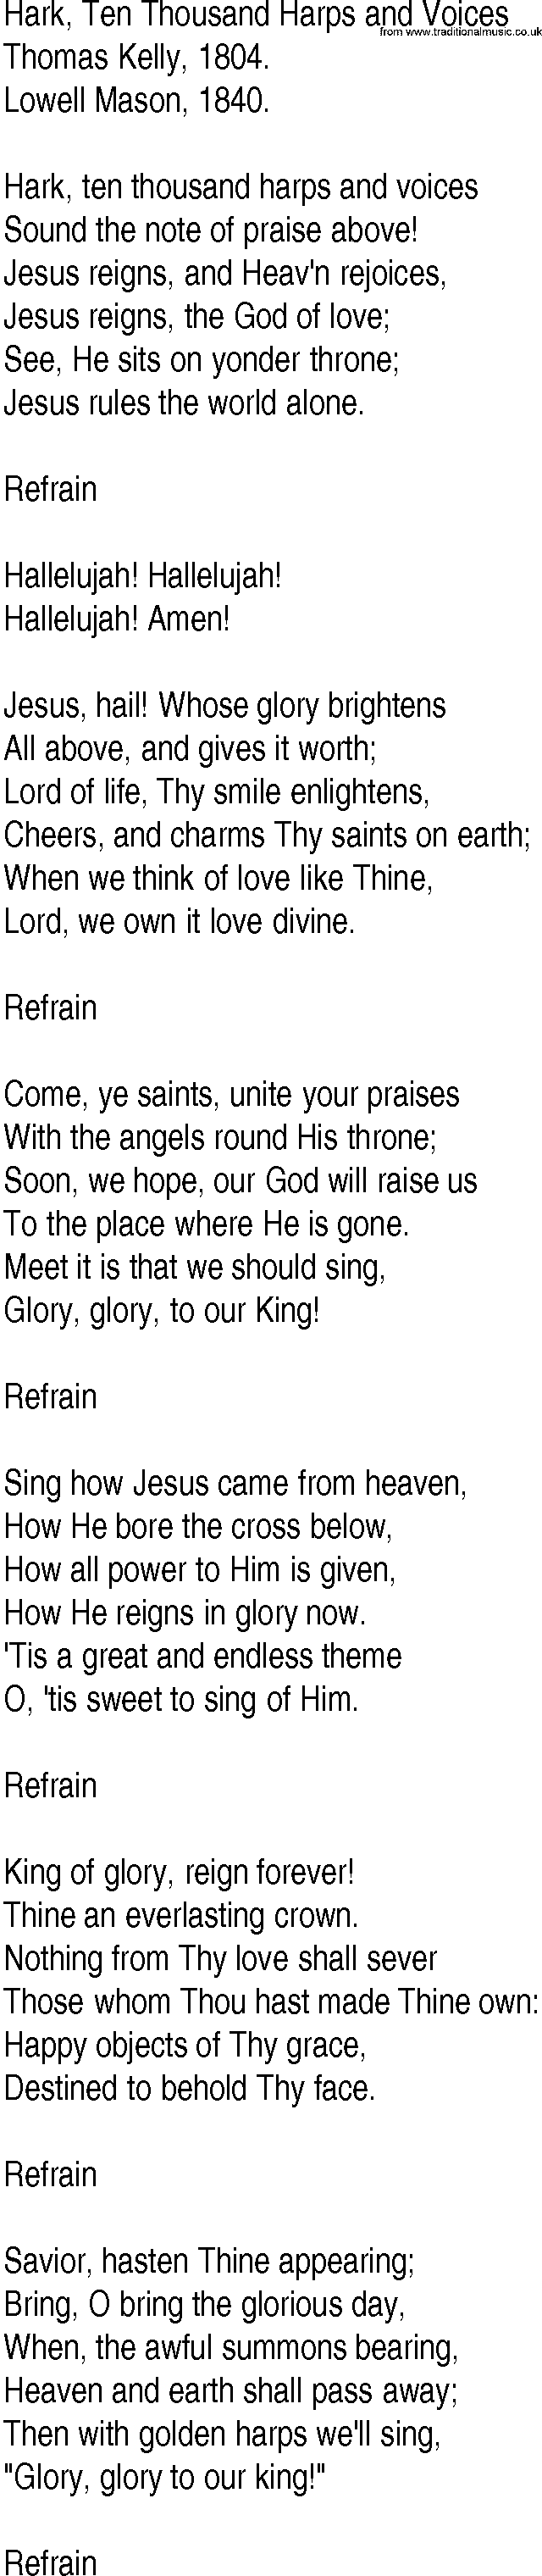 Hymn and Gospel Song: Hark, Ten Thousand Harps and Voices by Thomas Kelly lyrics